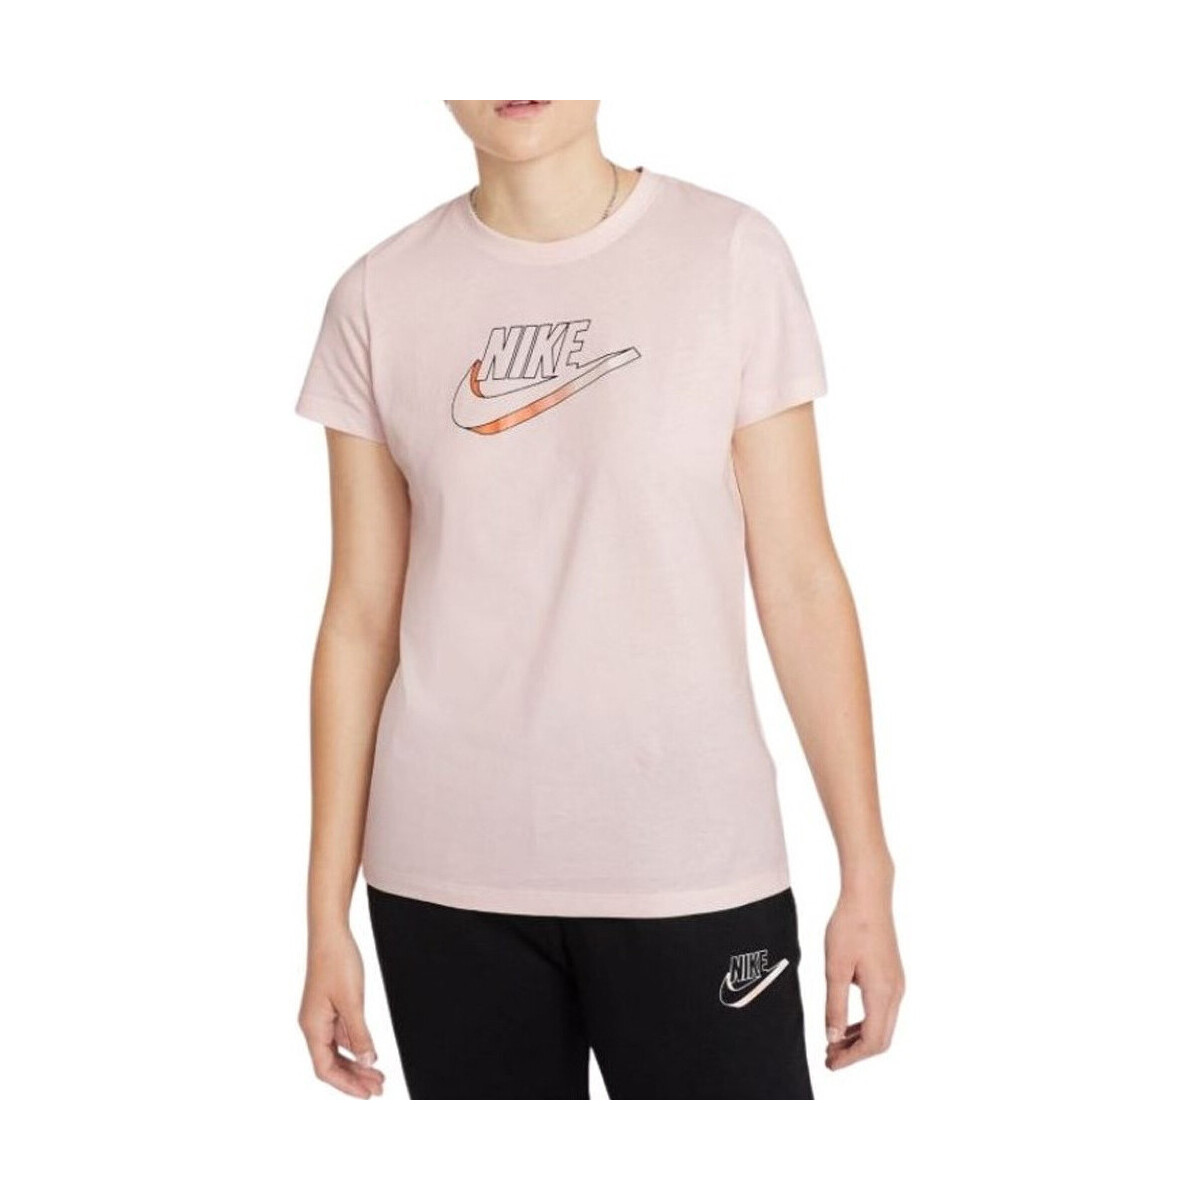 textil Mujer Tops y Camisetas Nike  Rosa